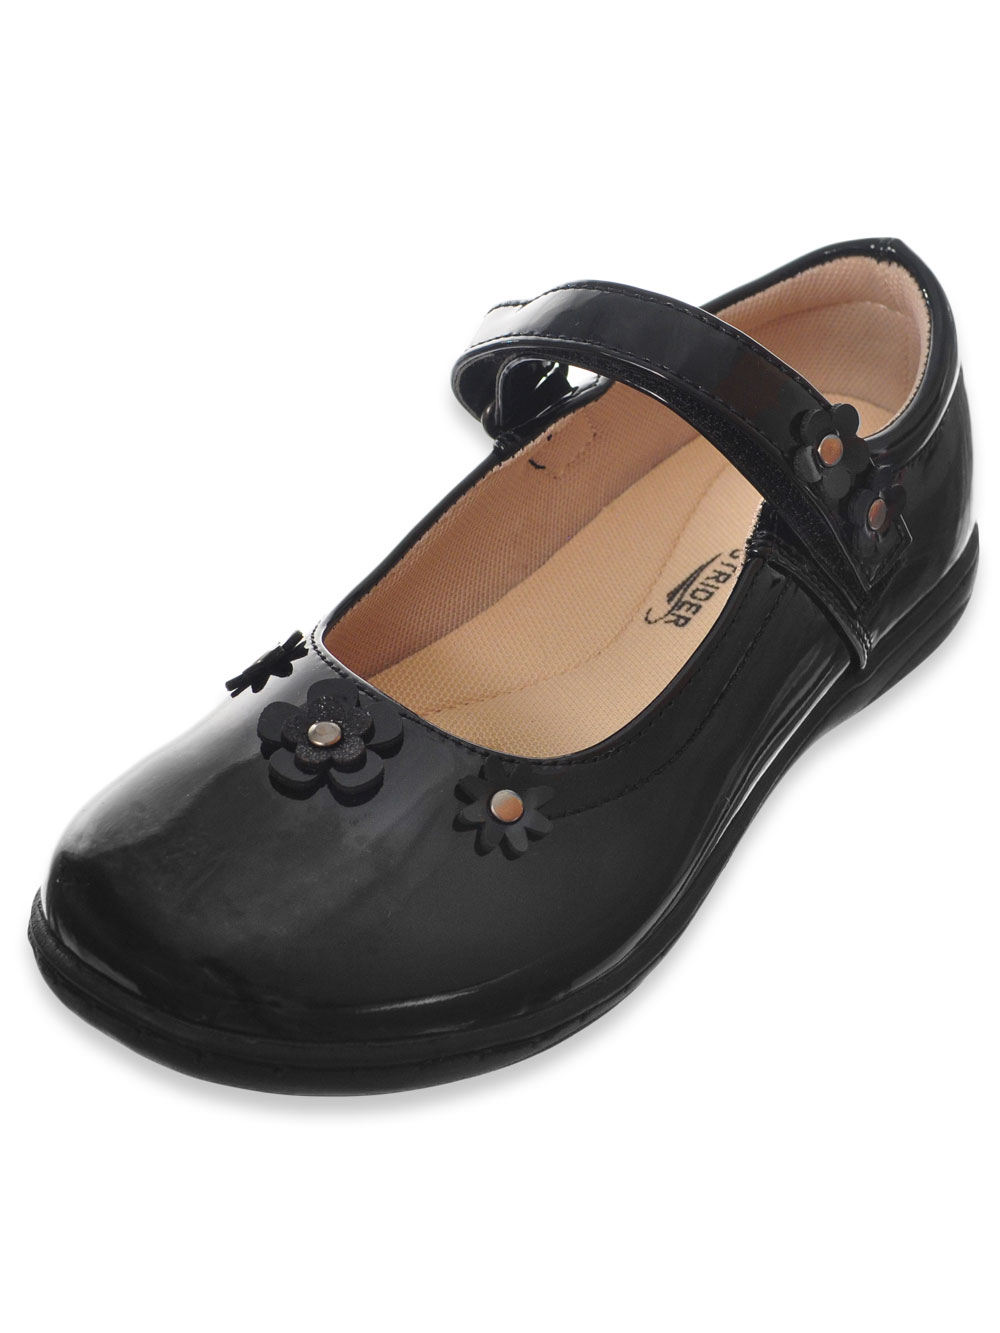 black mary jane shoes kids